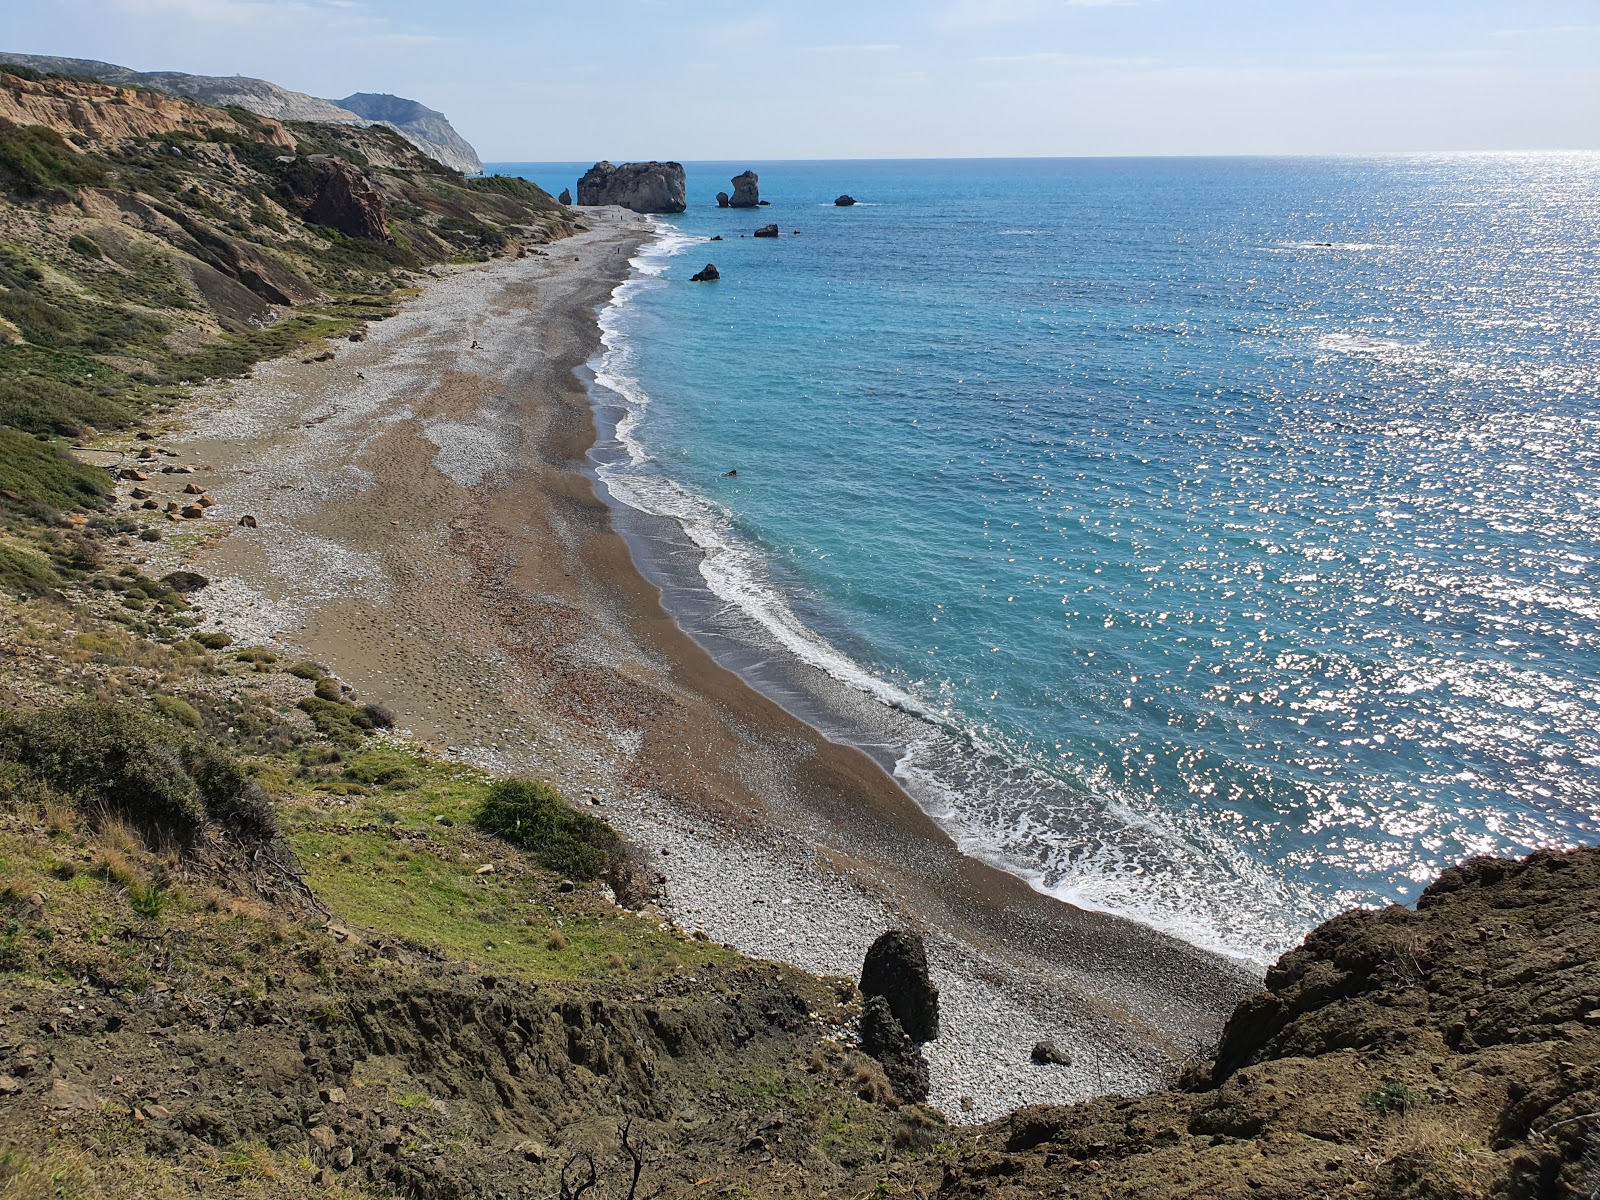 Fotografija Aphrodite's rock beach z sivi kamenček površino